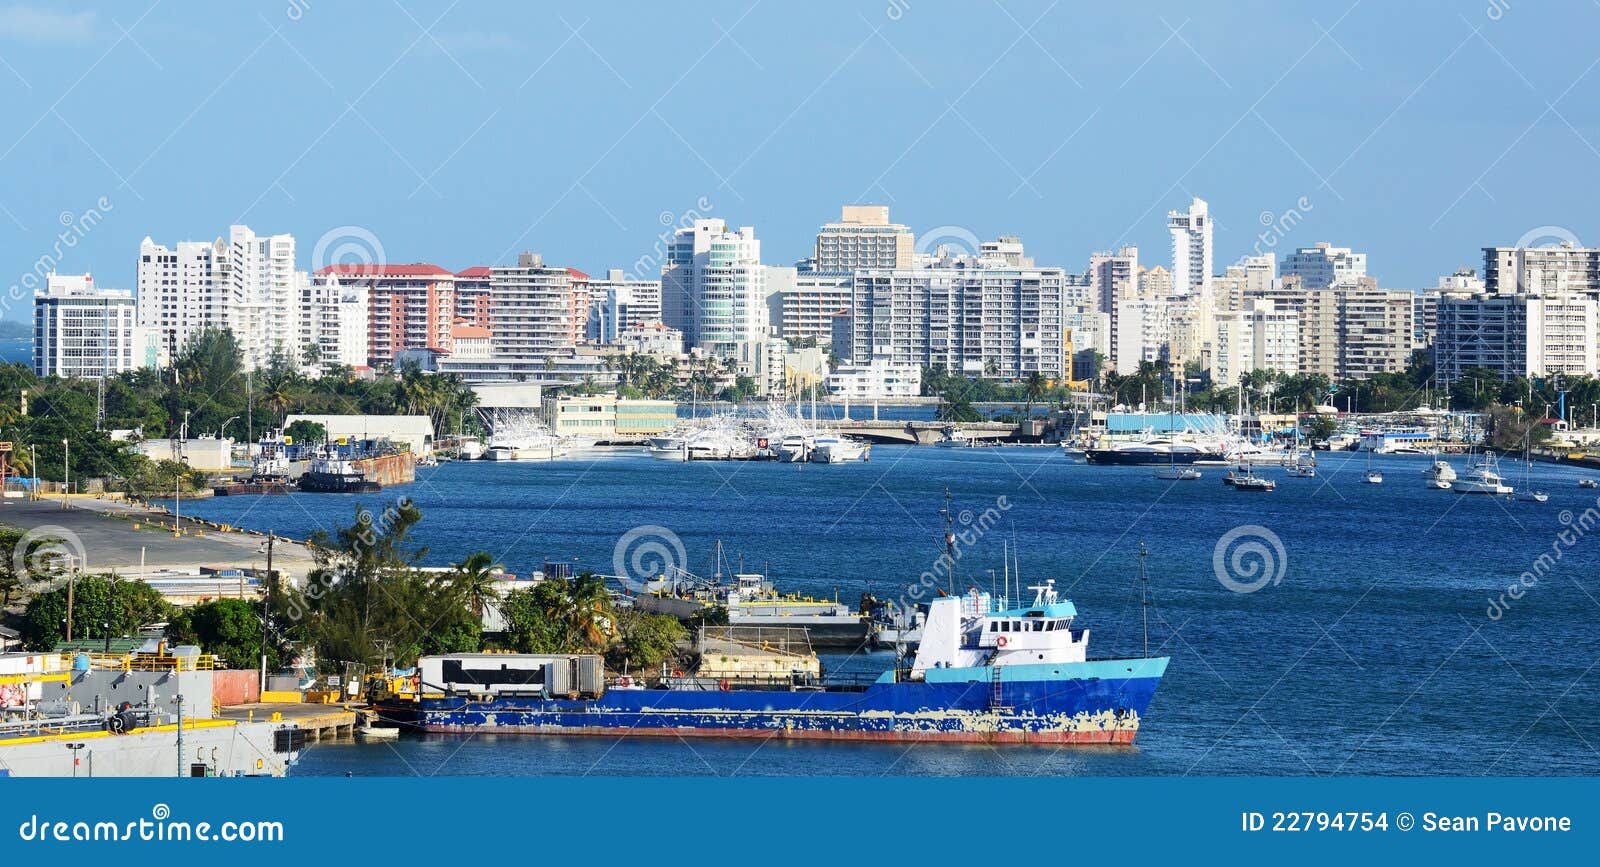 san juan, puerto rico skyline